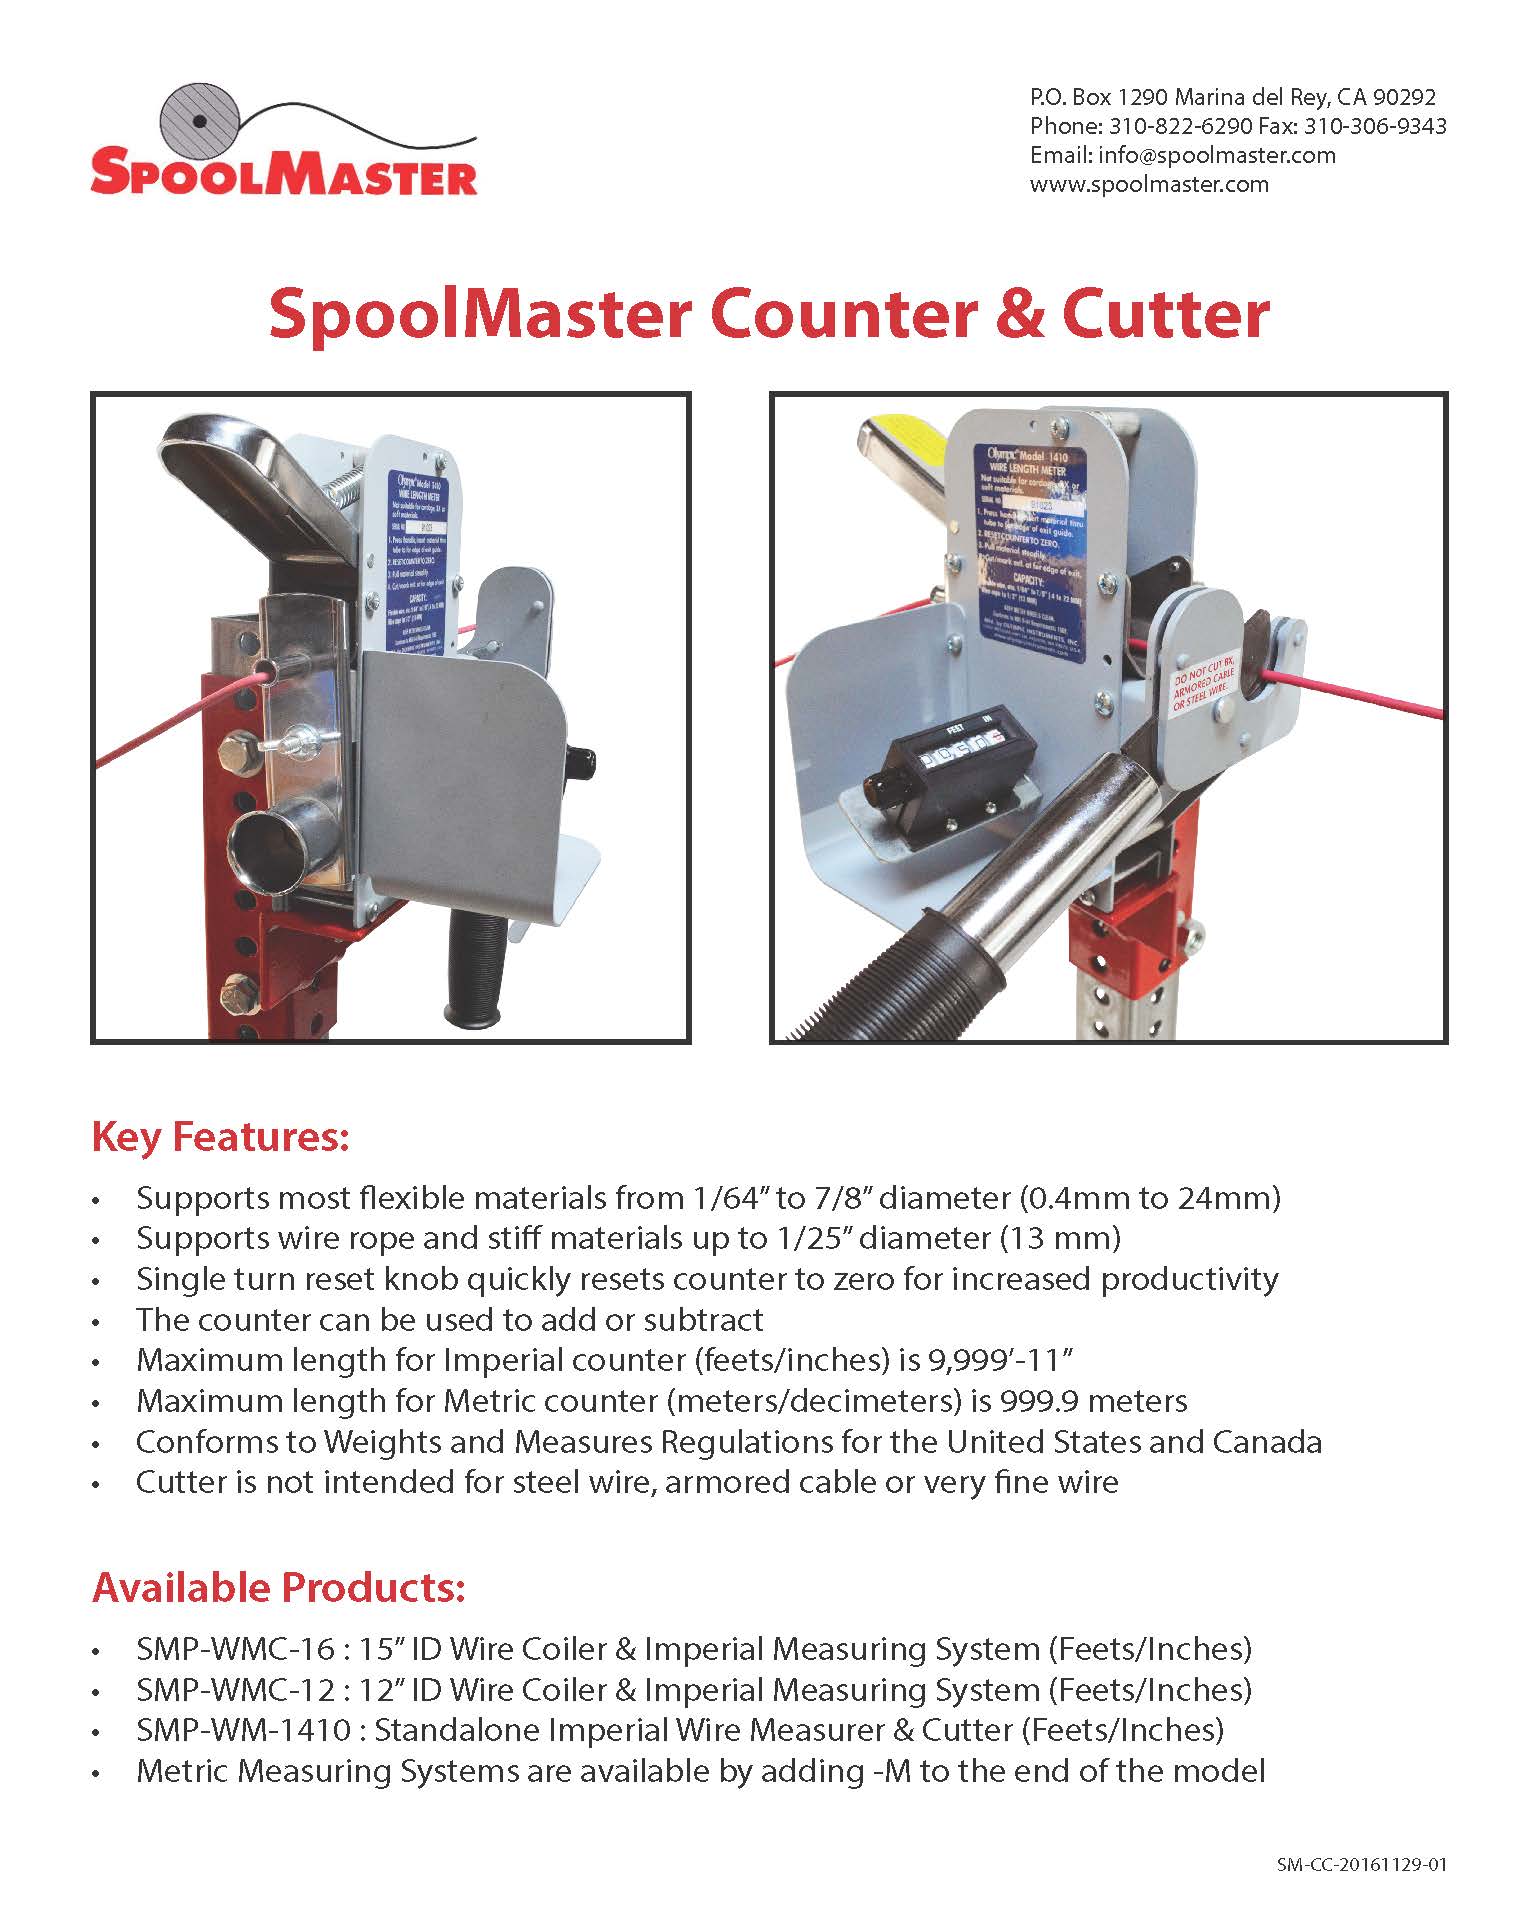 SpoolMaster Cut Sheets